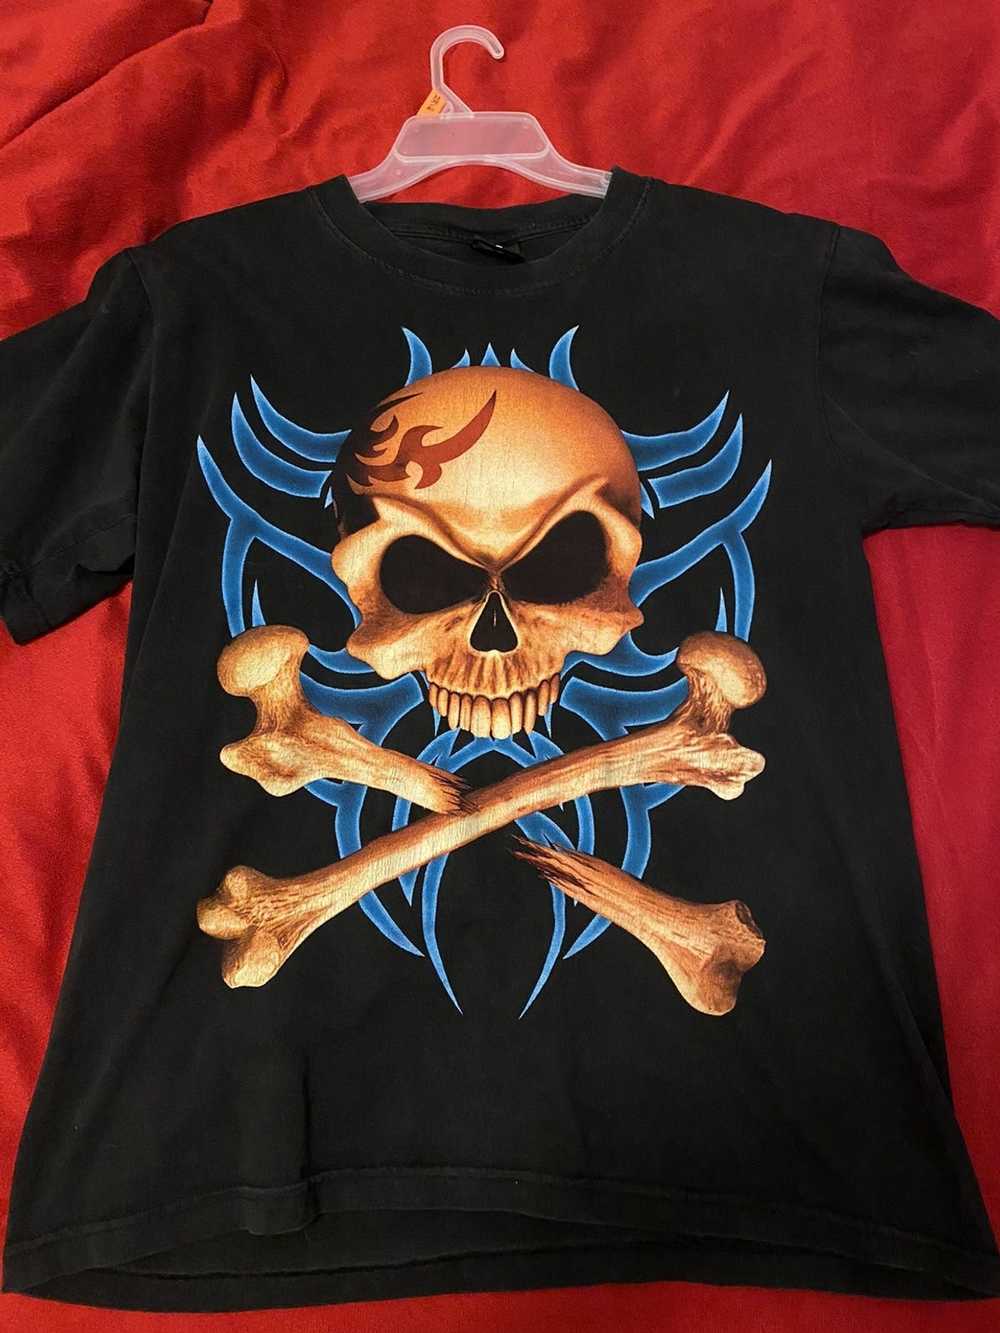 Jasper's Curiosity Grateful Dead Skull & Roses T-Shirt in Black, Men's Unisex, 100% Cotton in Classic Standard Fit Small